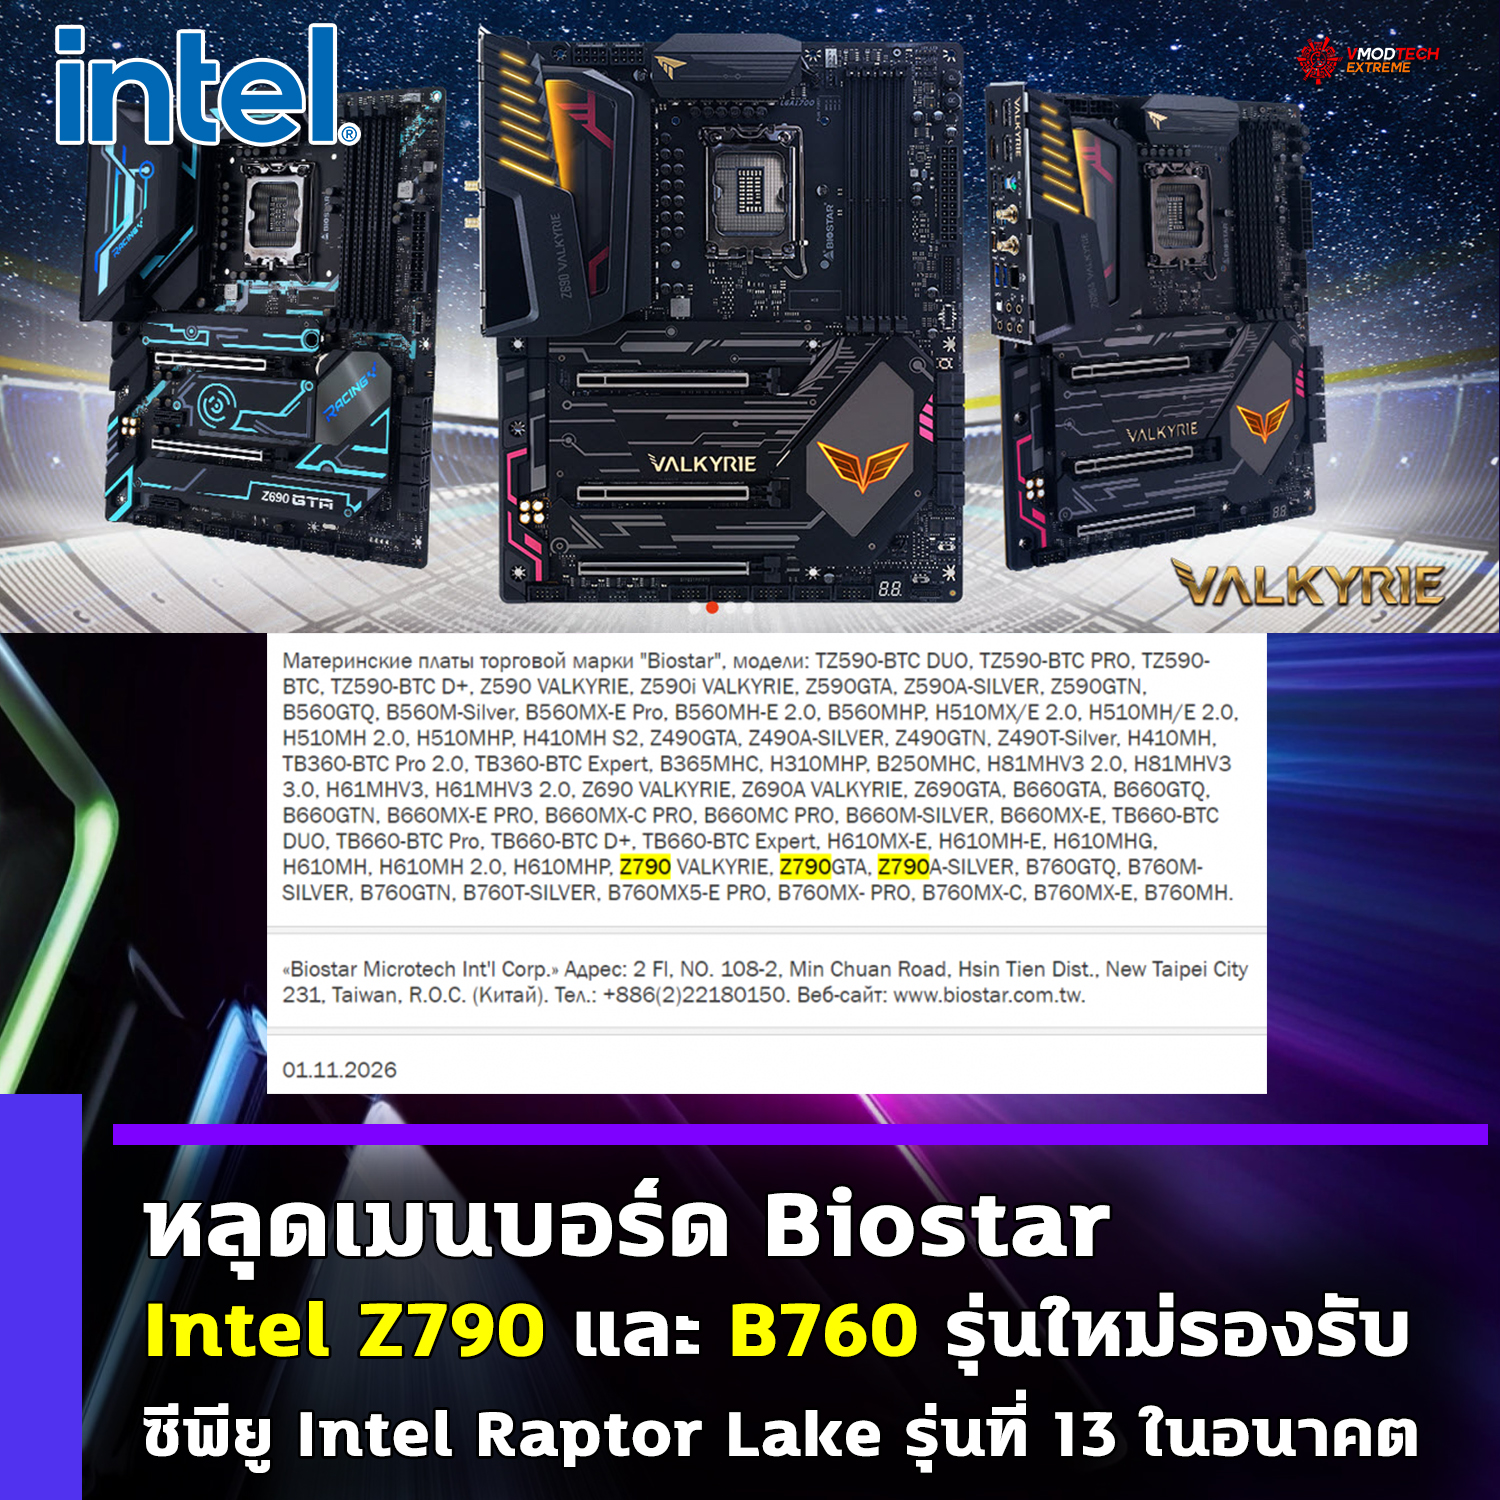 intel z790 b760 หลุดเมนบอร์ด Intel Z790 และ B760 รุ่นใหม่ที่ยังไม่เปิดตัวคาดว่าออกมารองรับซีพียู Intel Raptor Lake รุ่นที่ 13 ในอนาคต 